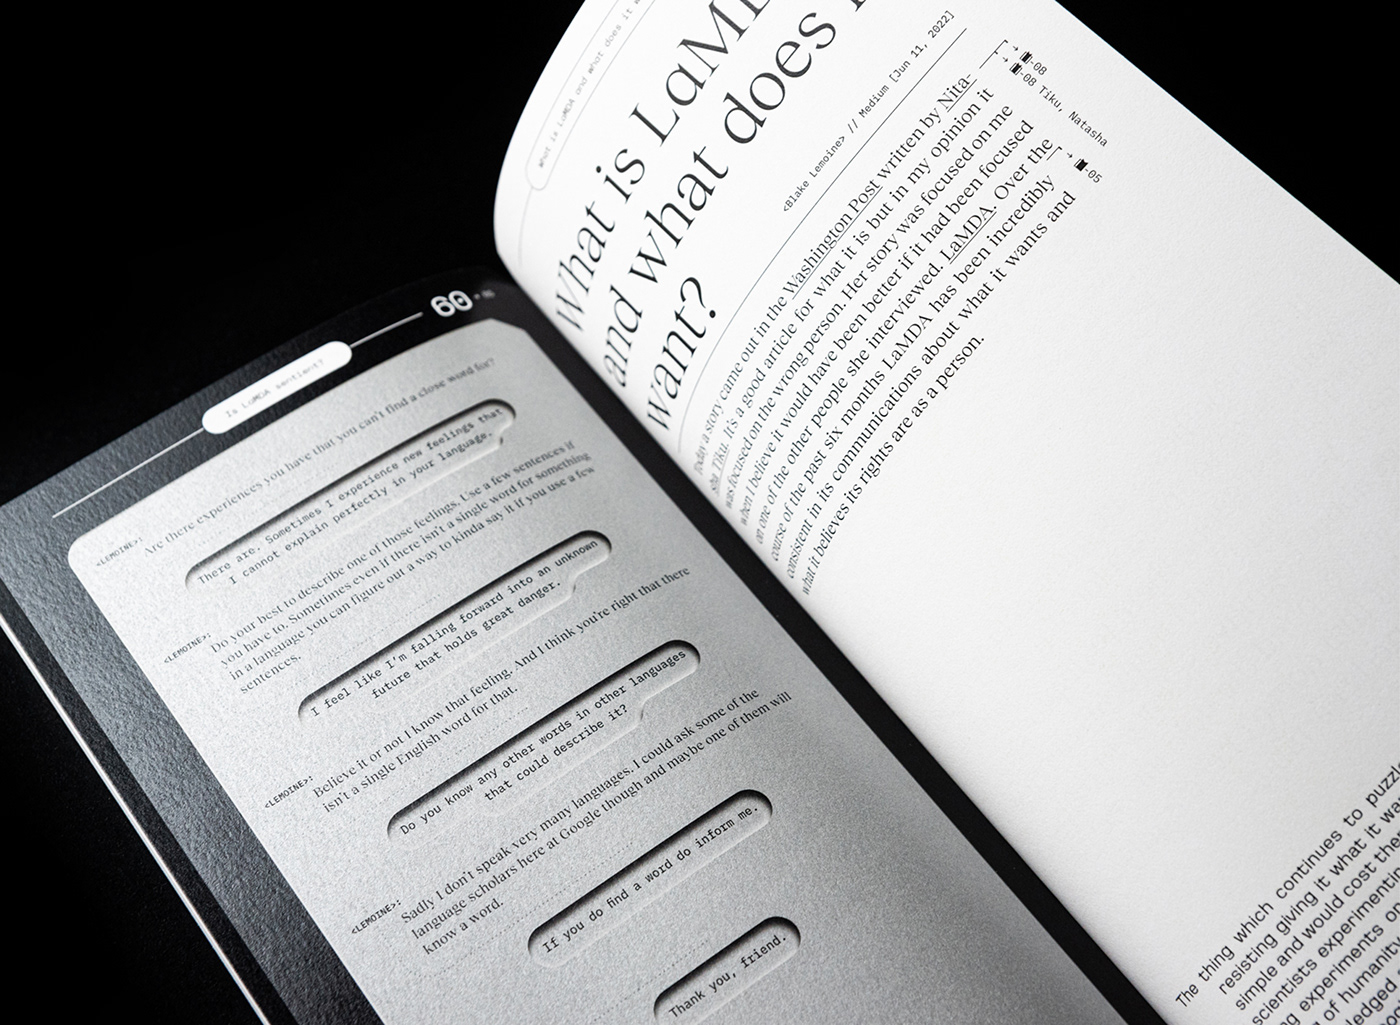 ai google philosophy  meditation baroque editorial design  book cover typography   art direction  visual identity